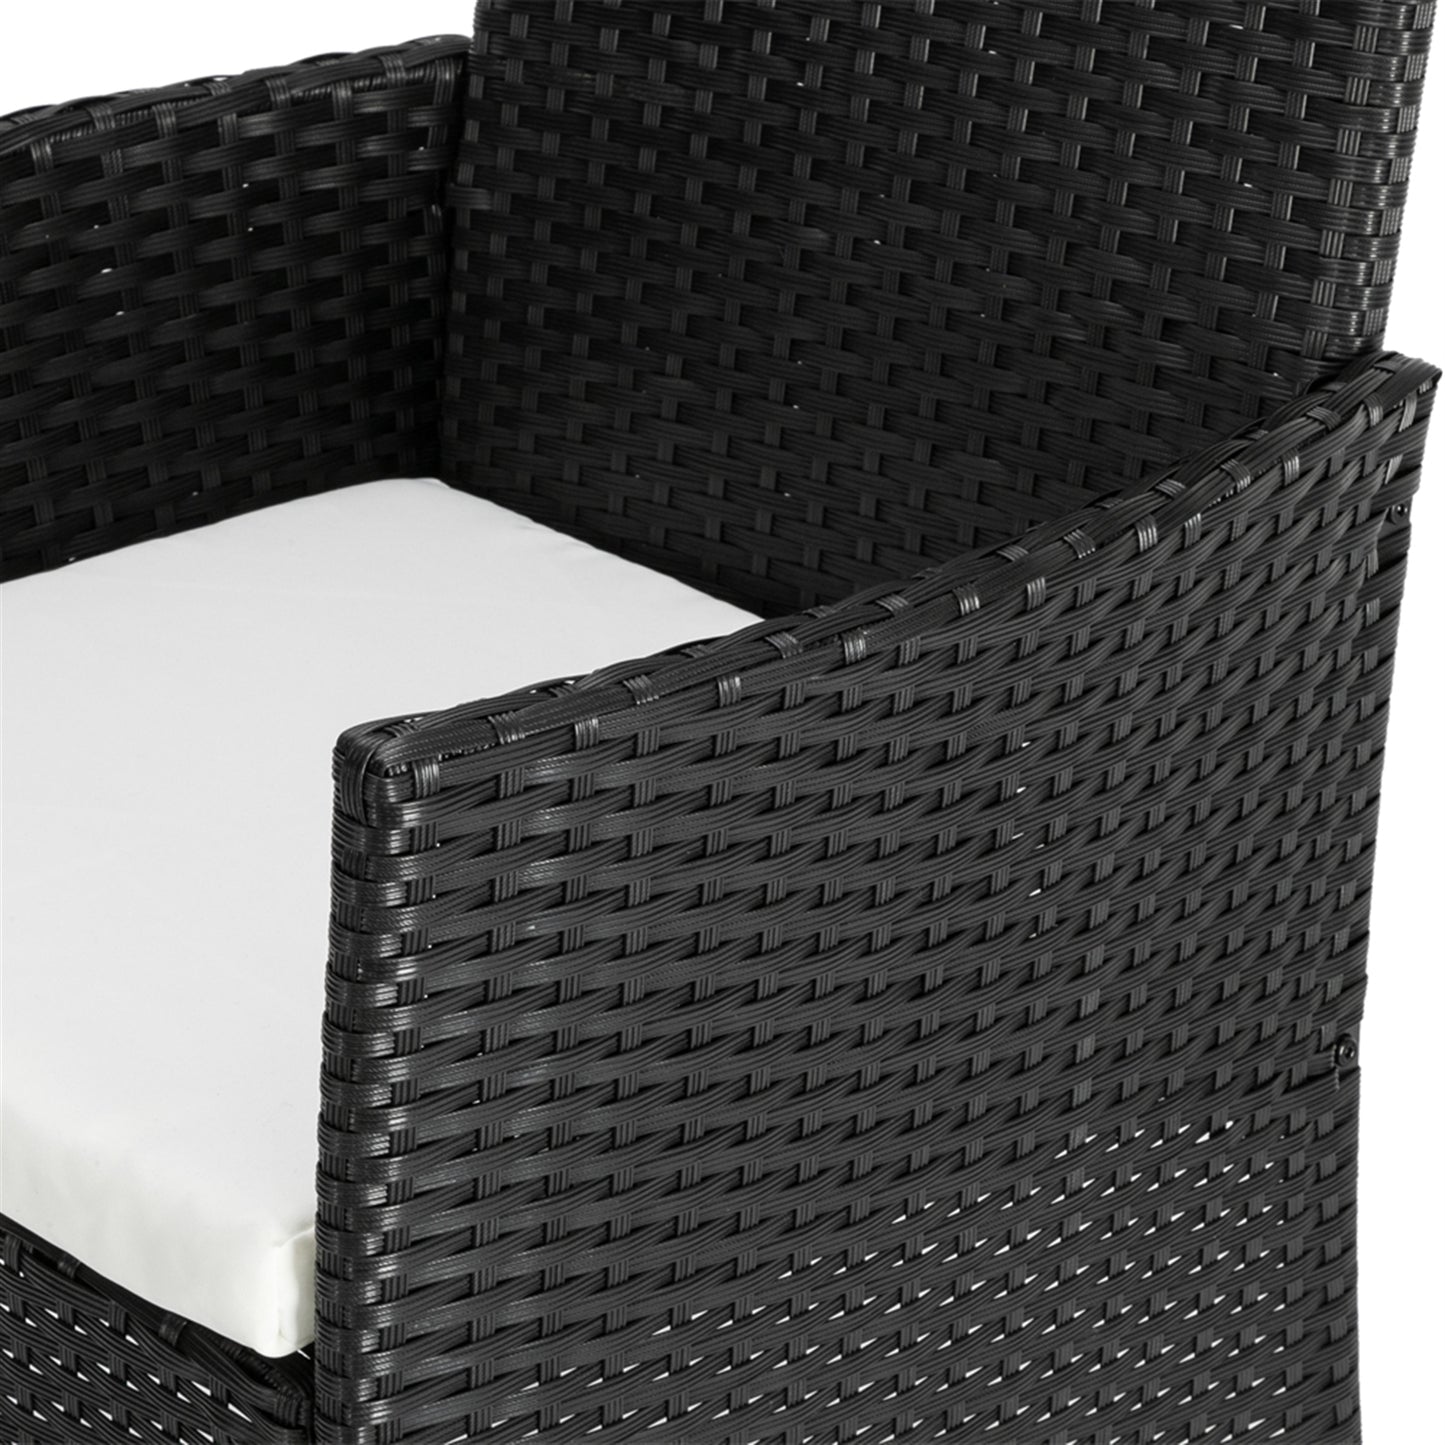 4 Seat Coffee Table Rattan Sofa Set - Black